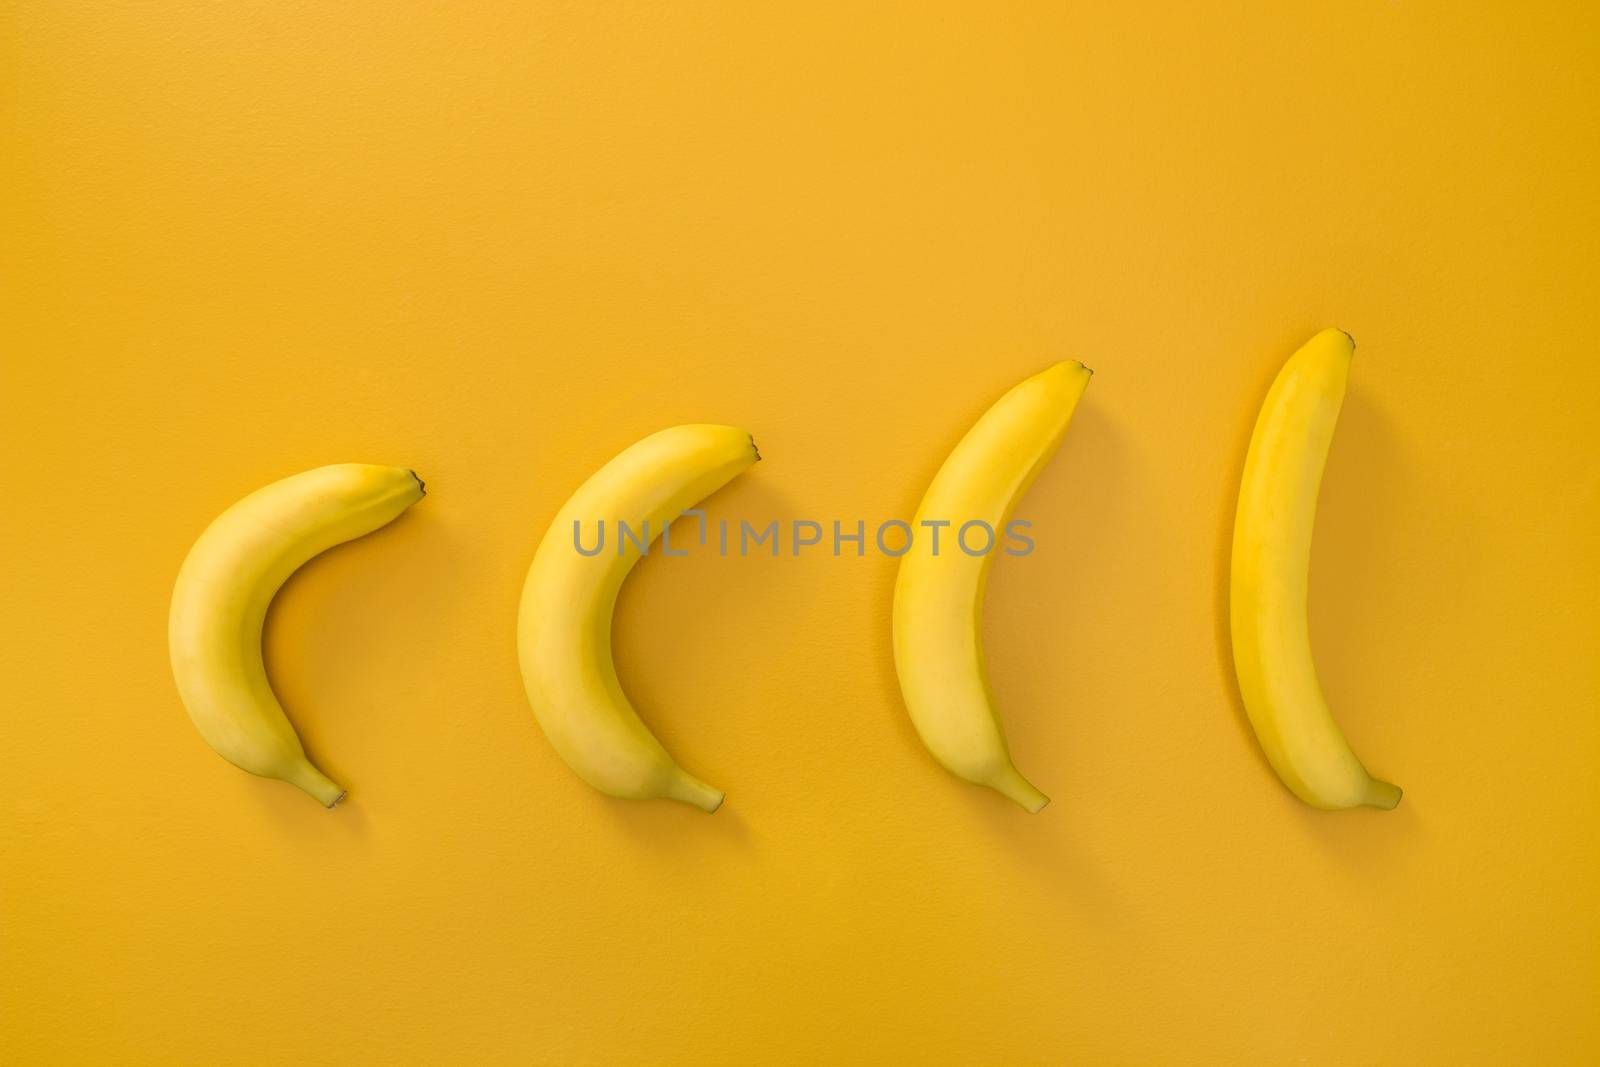 Bananas illustrating evolution theory by anikasalsera